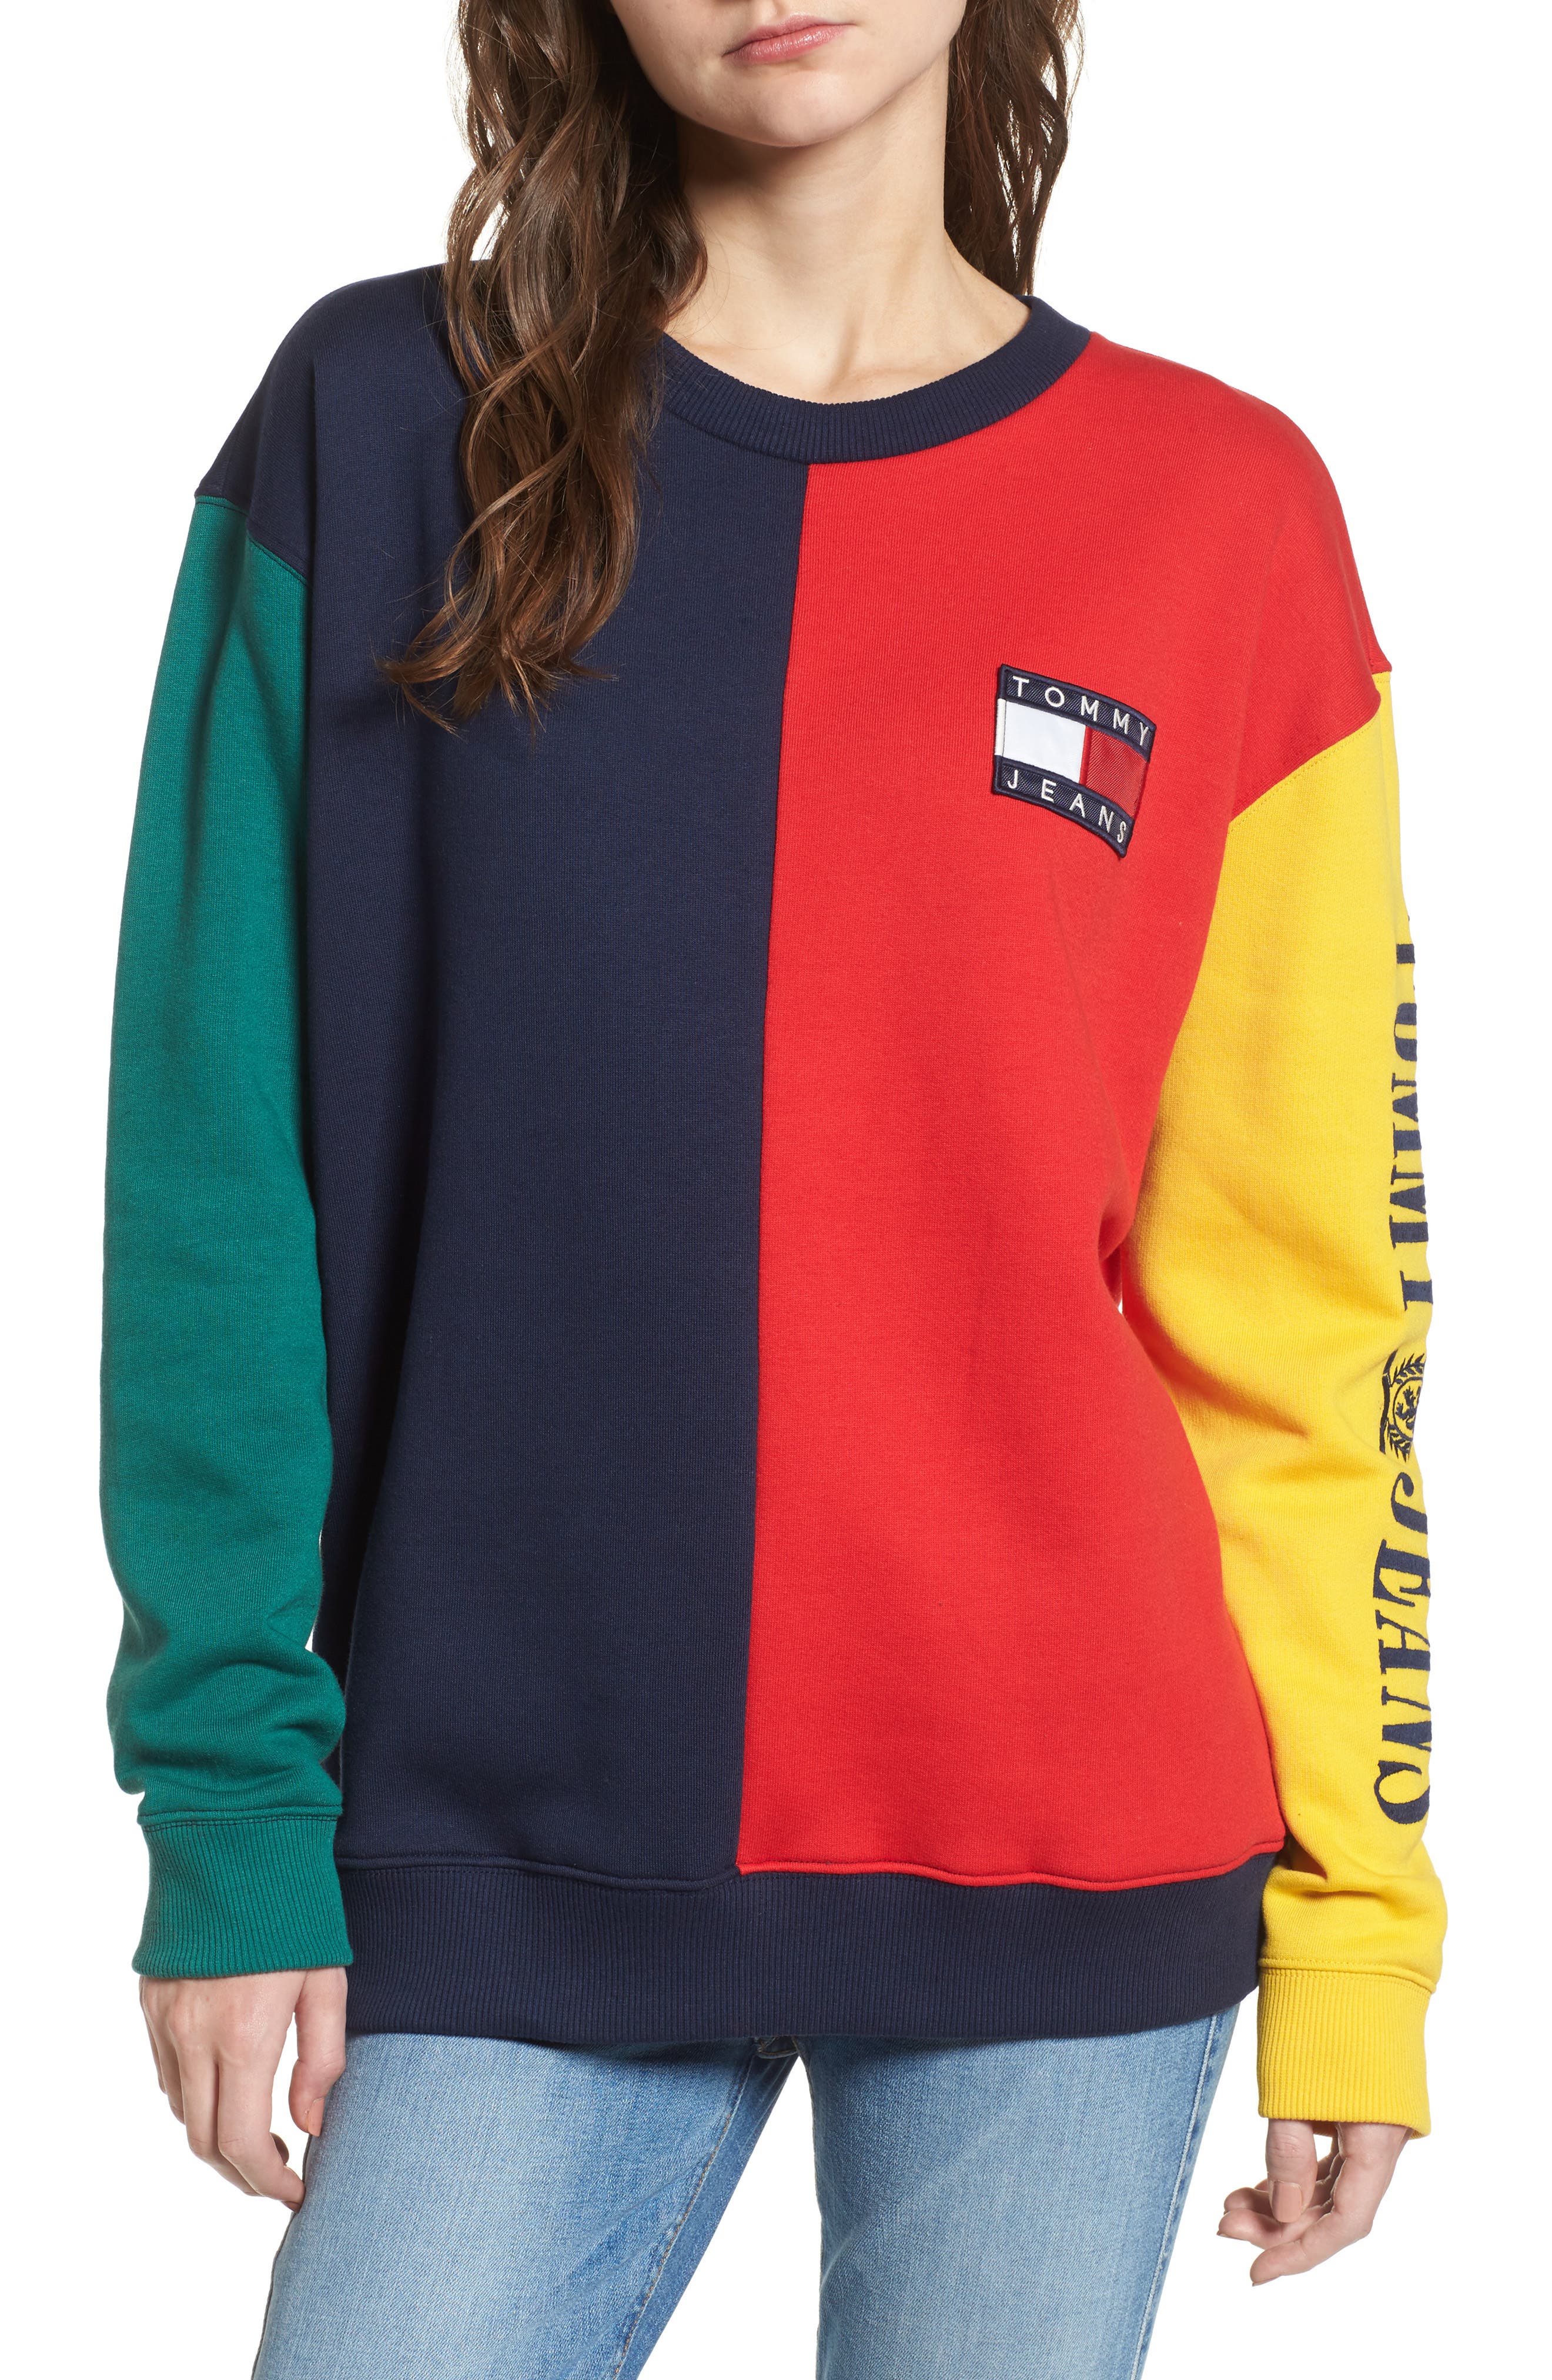 TOMMY JEANS '90s Colorblock Sweatshirt 